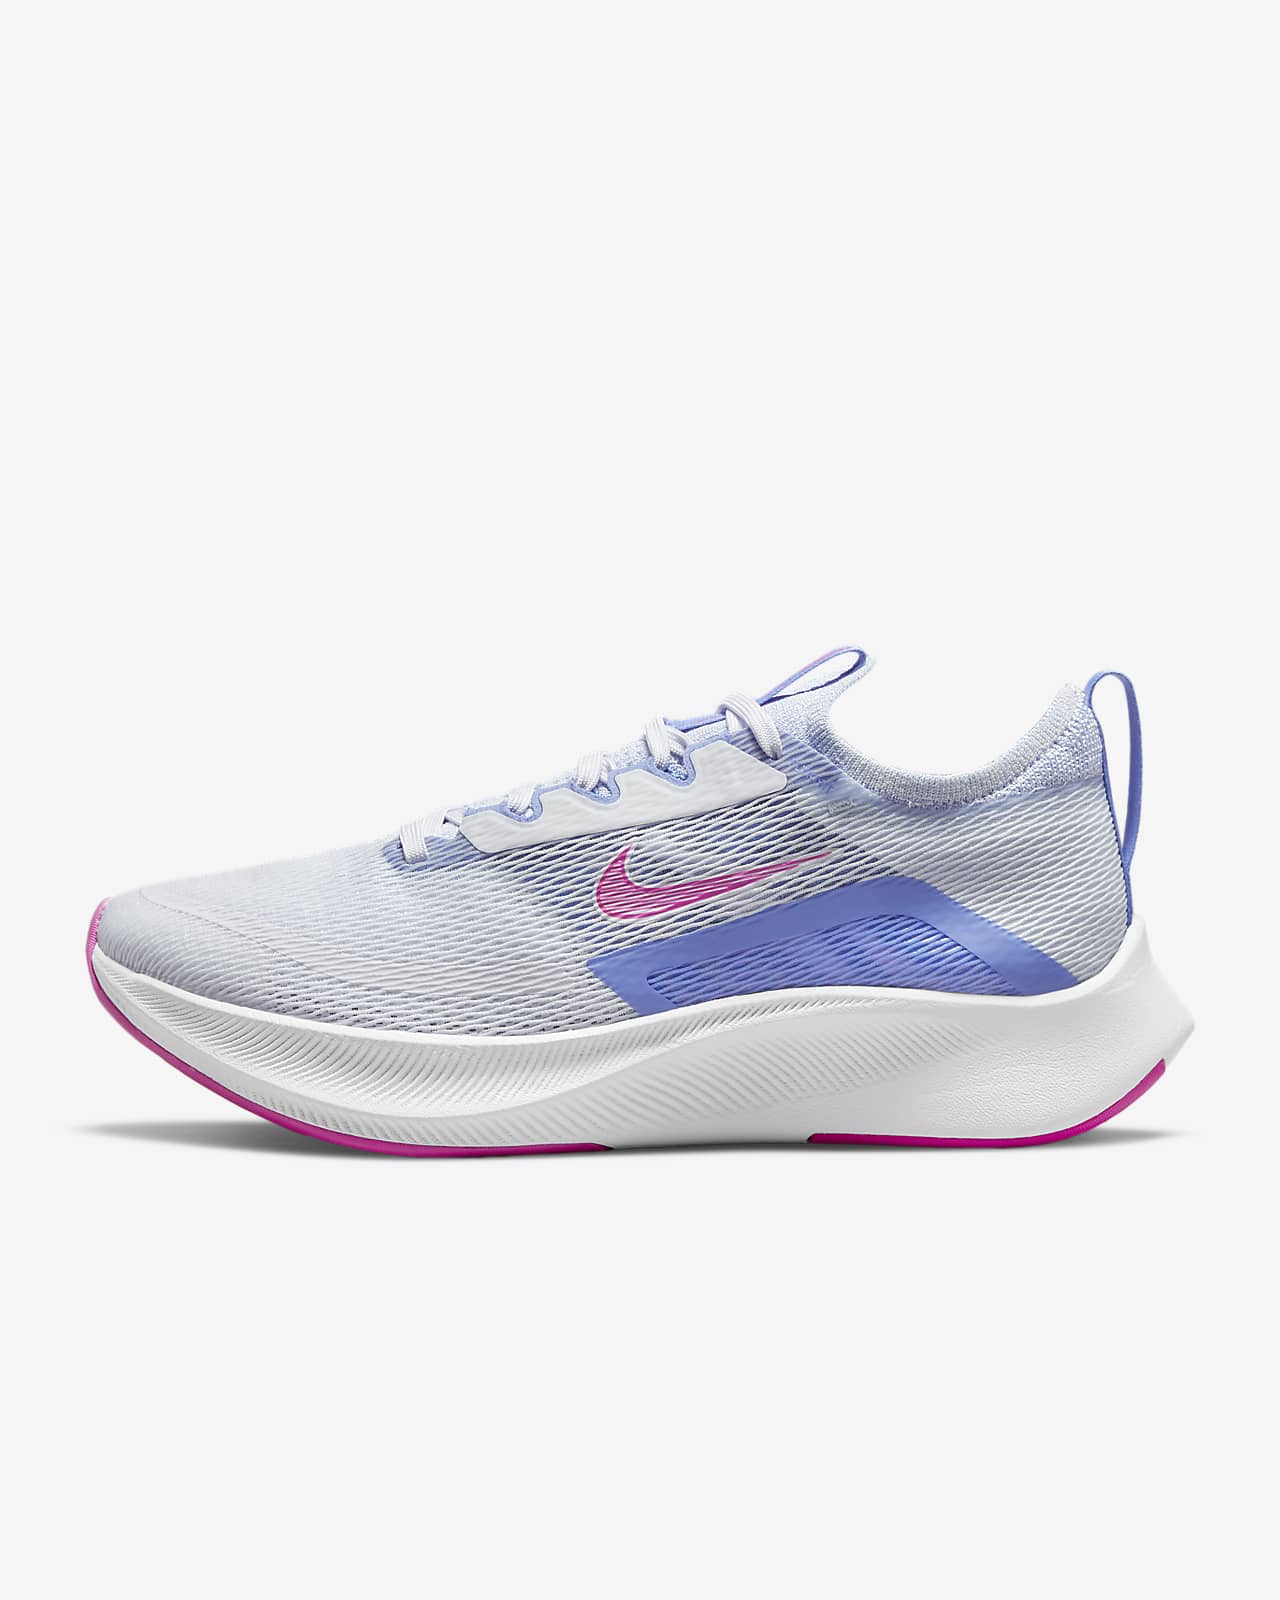 Chaussure de running sur route Nike Zoom Fly 4 pour Femme